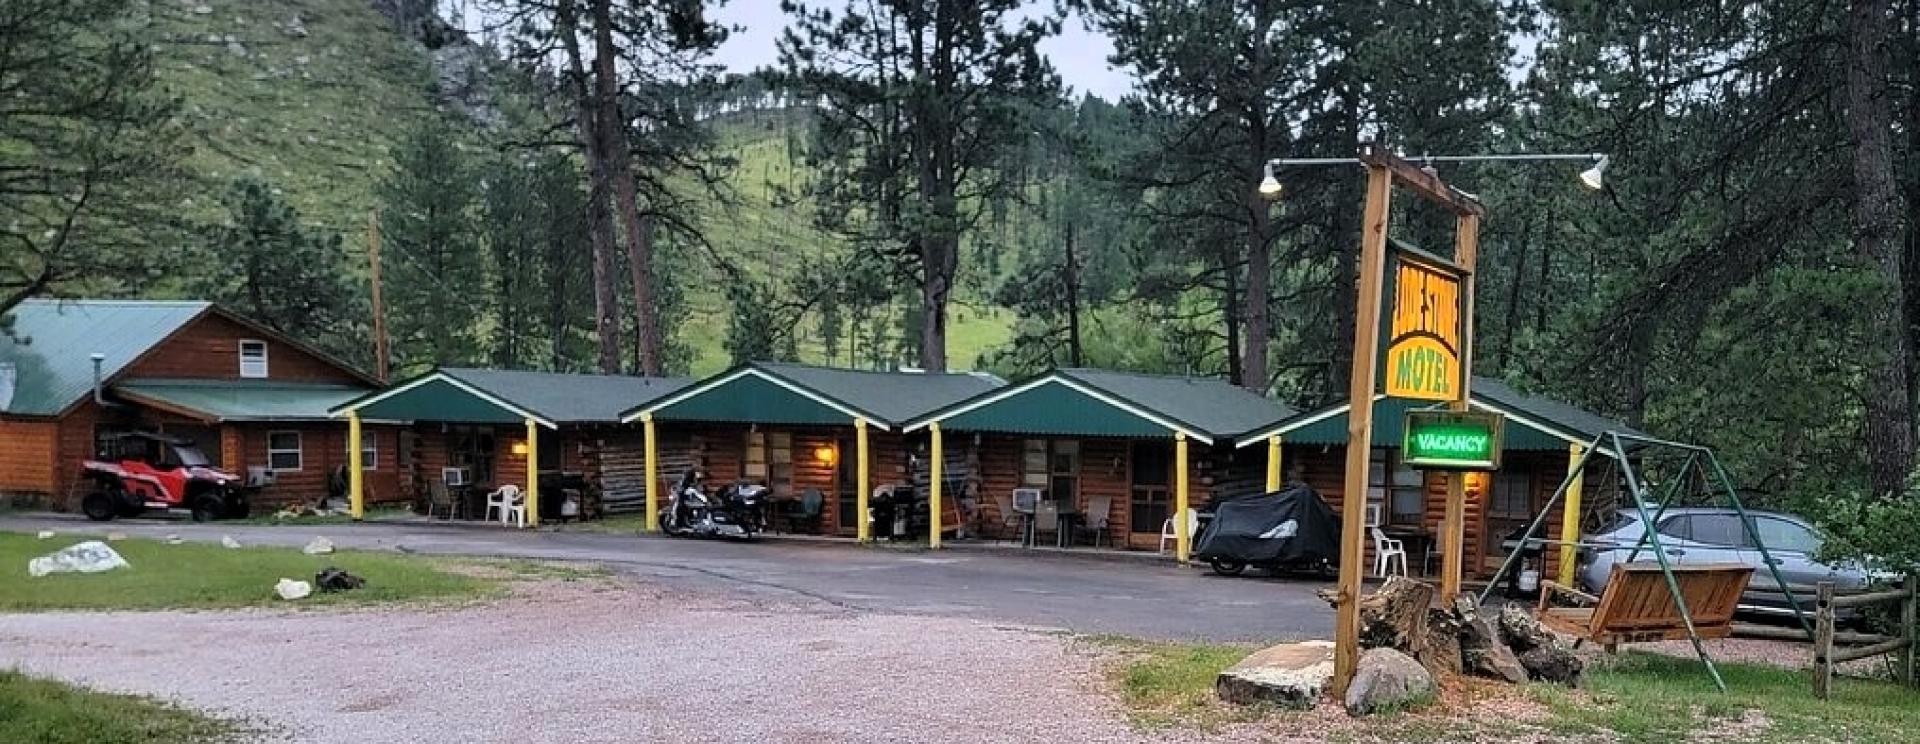 Lode Stone Motel & Cabins